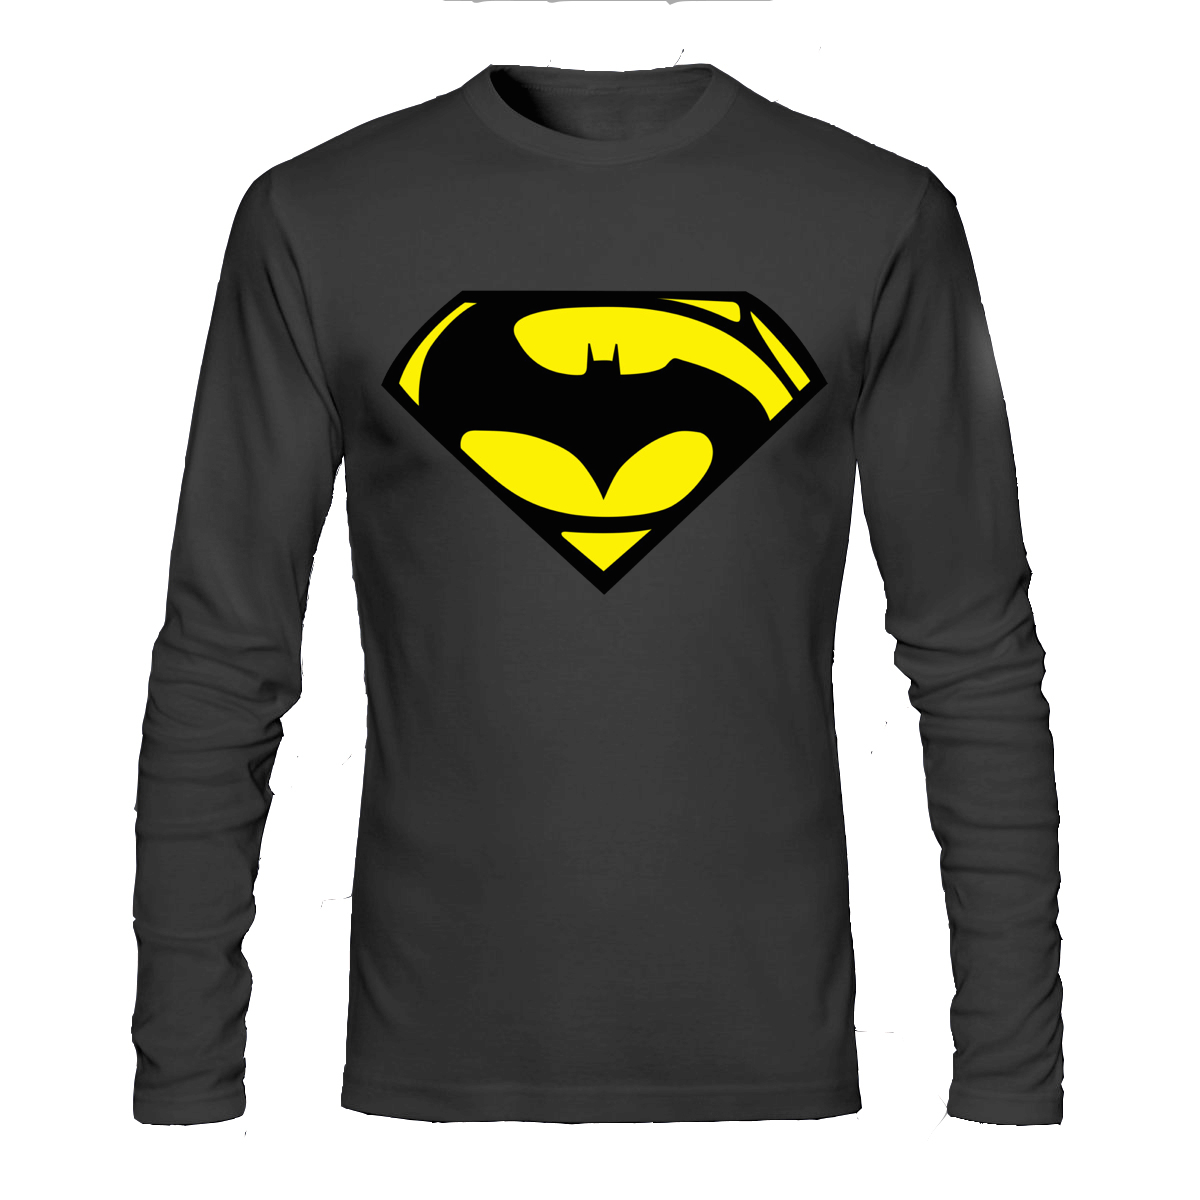 Batman Vs Superman T-Shirts & Hoodies